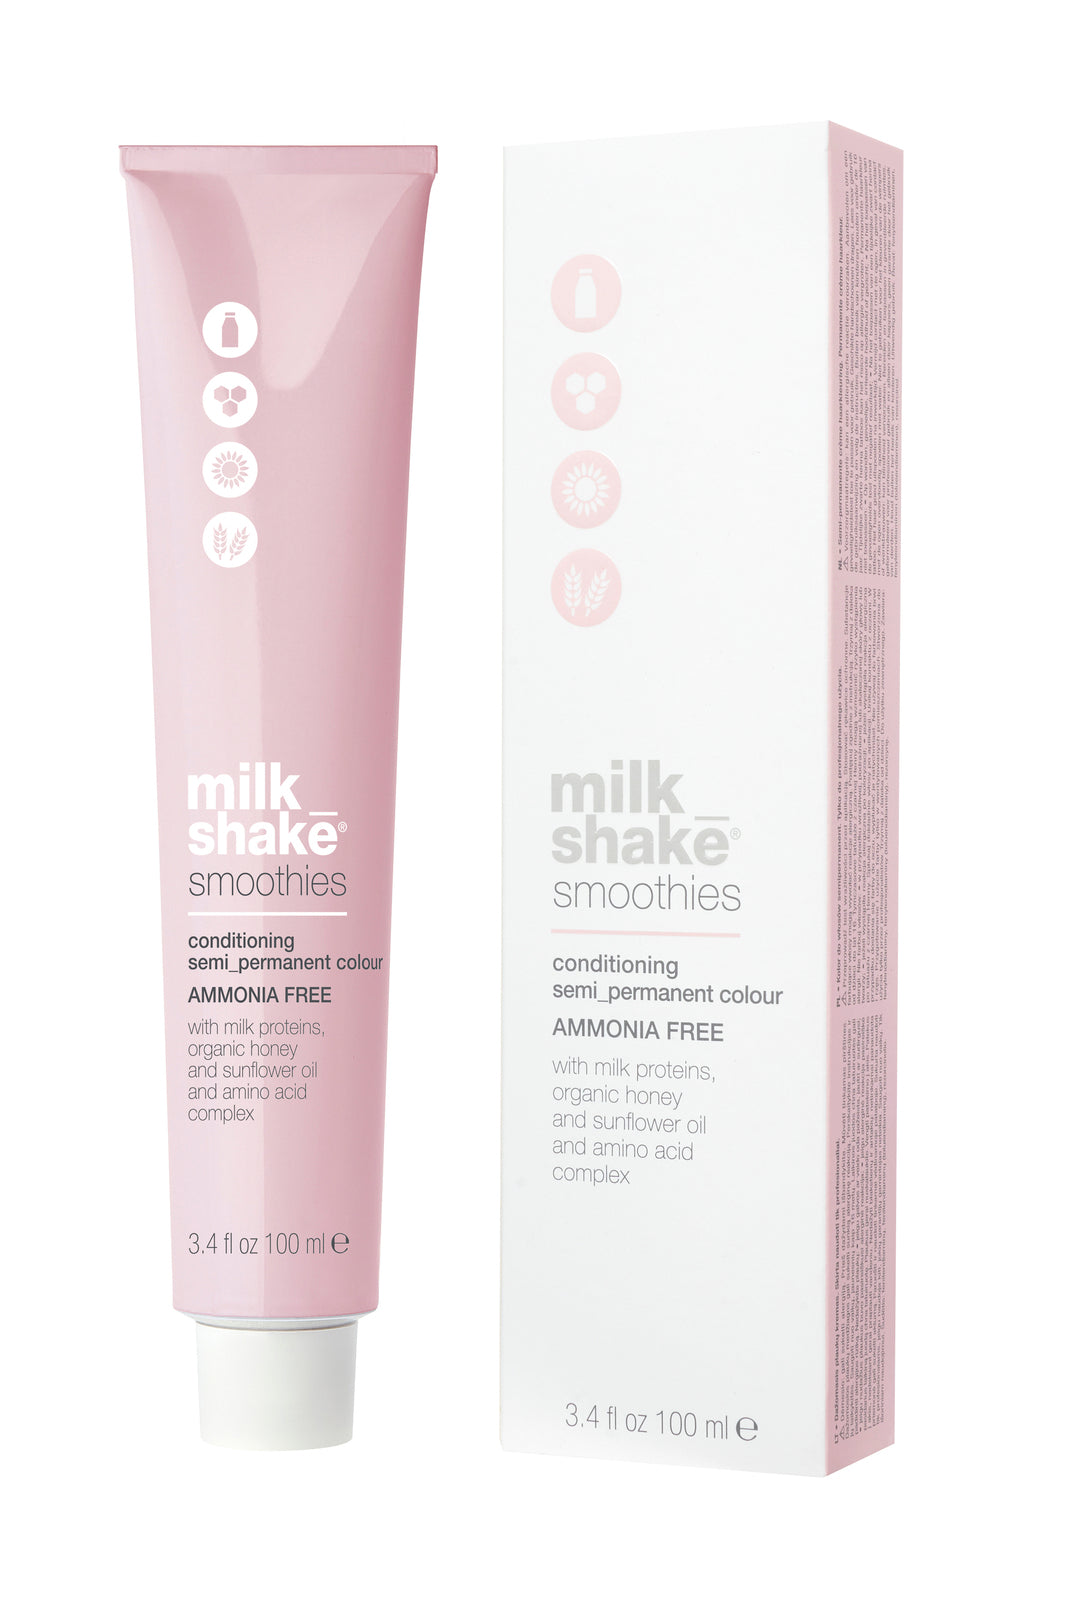 Milkshake smoothies semi-permanent color 7.1